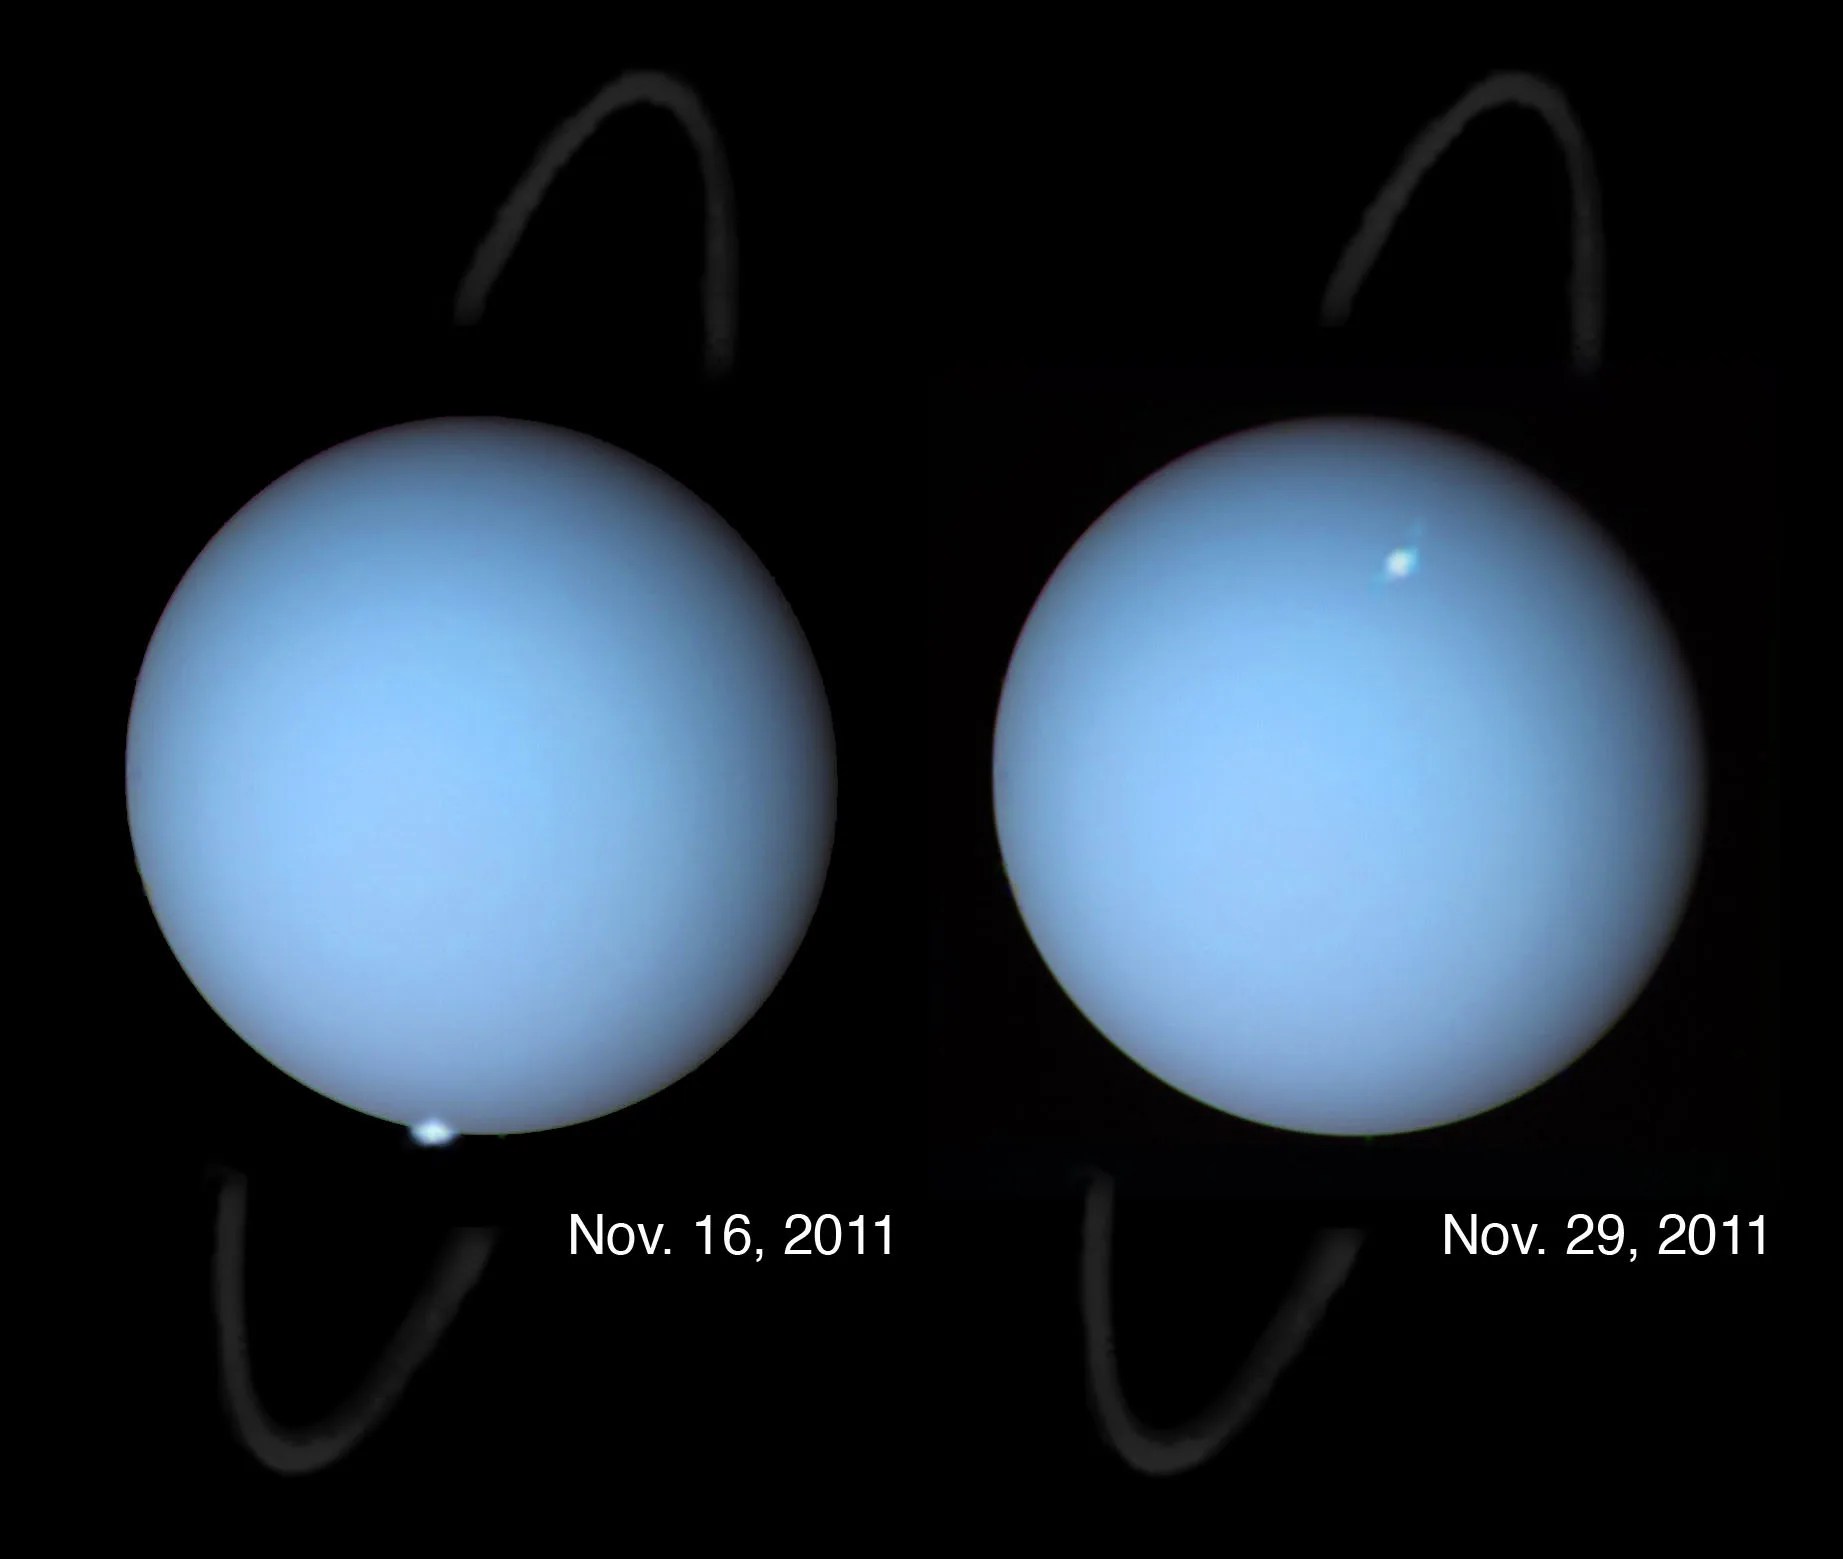 Hubble spots aurorae on planet uranus